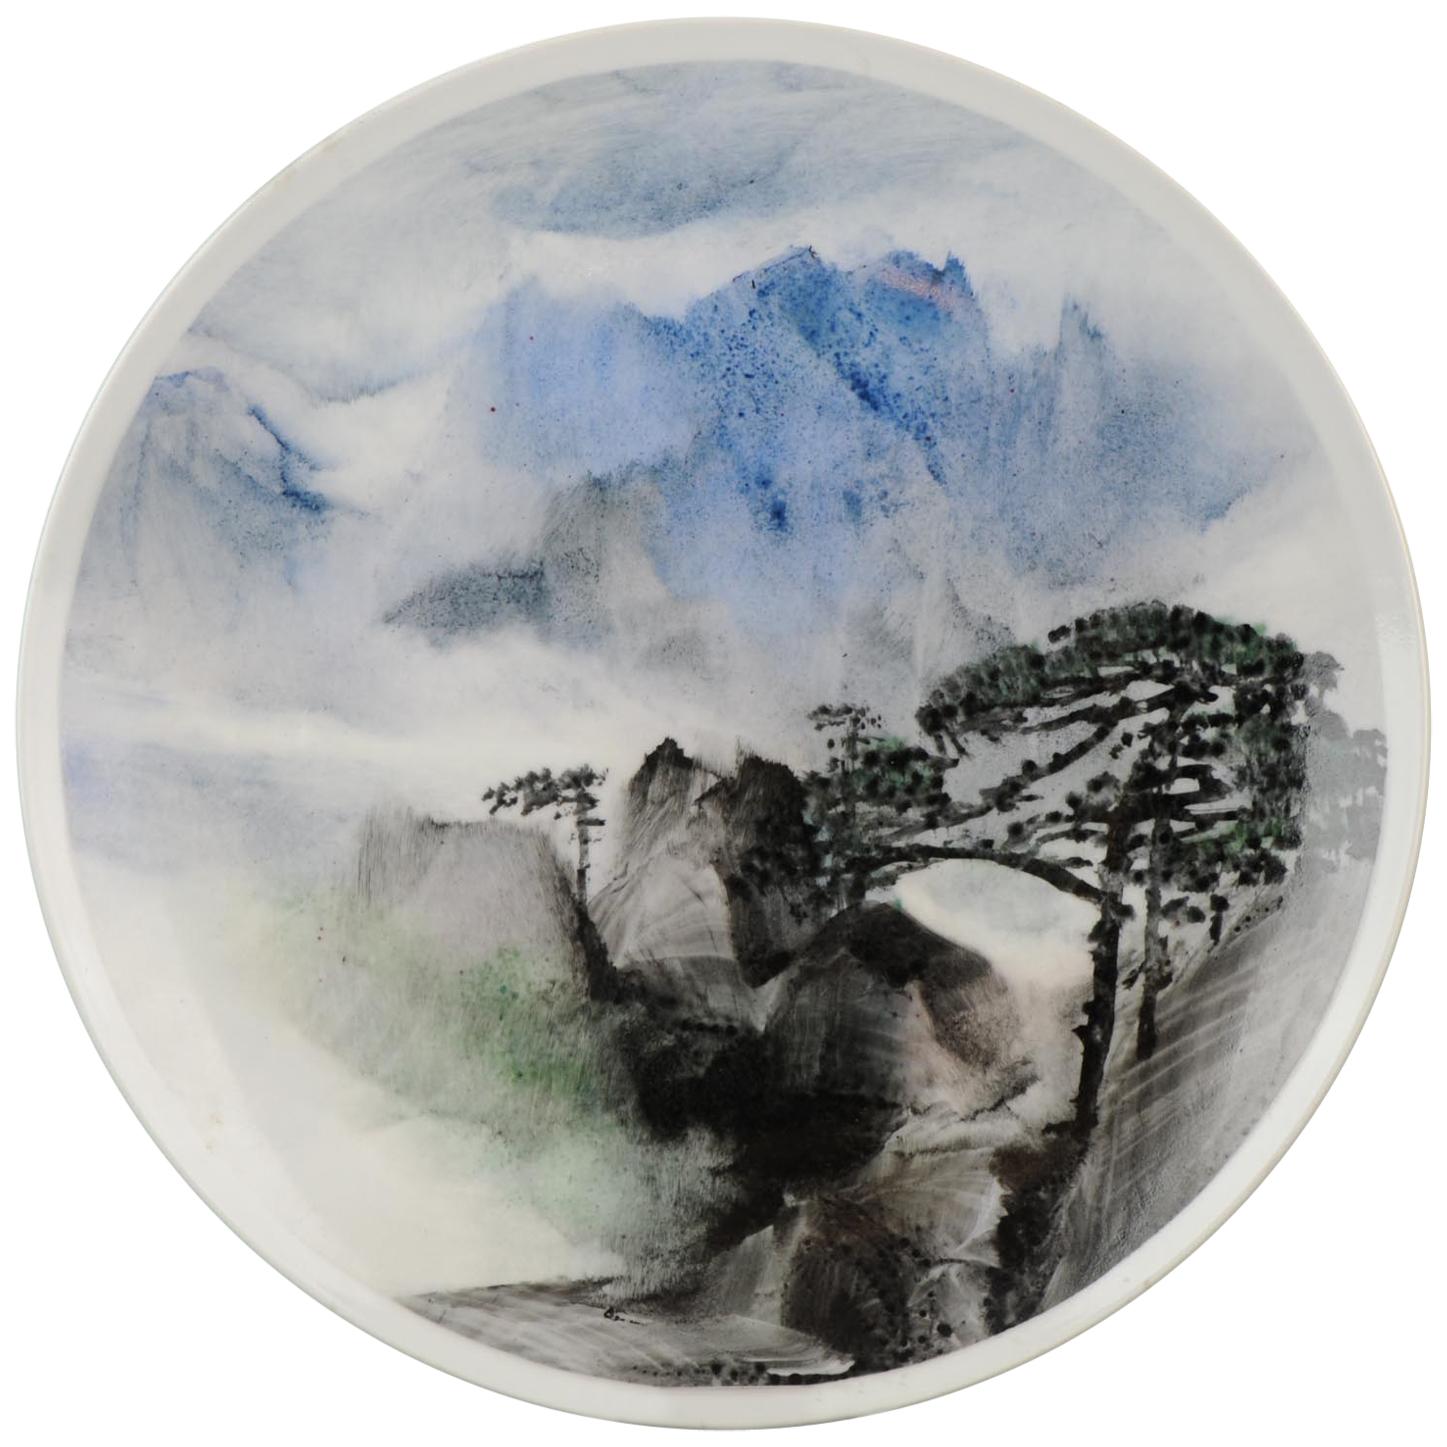 Li Linhong '1942' "Mount Huangshan" Artist Marked Plate Chinese Porcelain For Sale